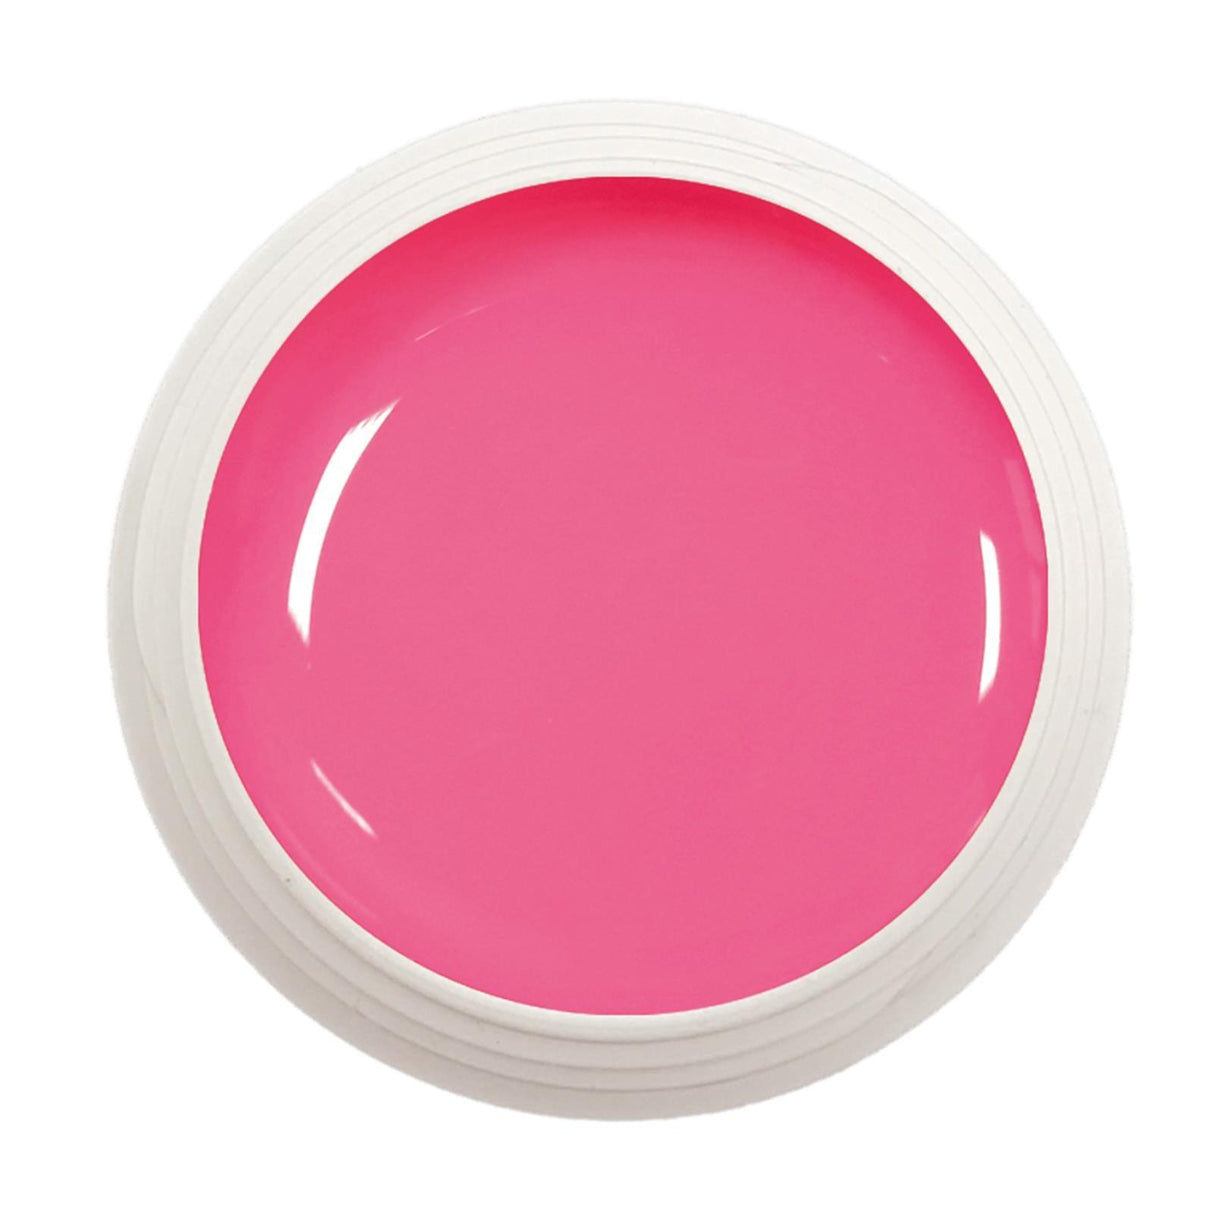 #847 Premium-DEKO Color Gel 5ml Deko - MSE - The Beauty Company